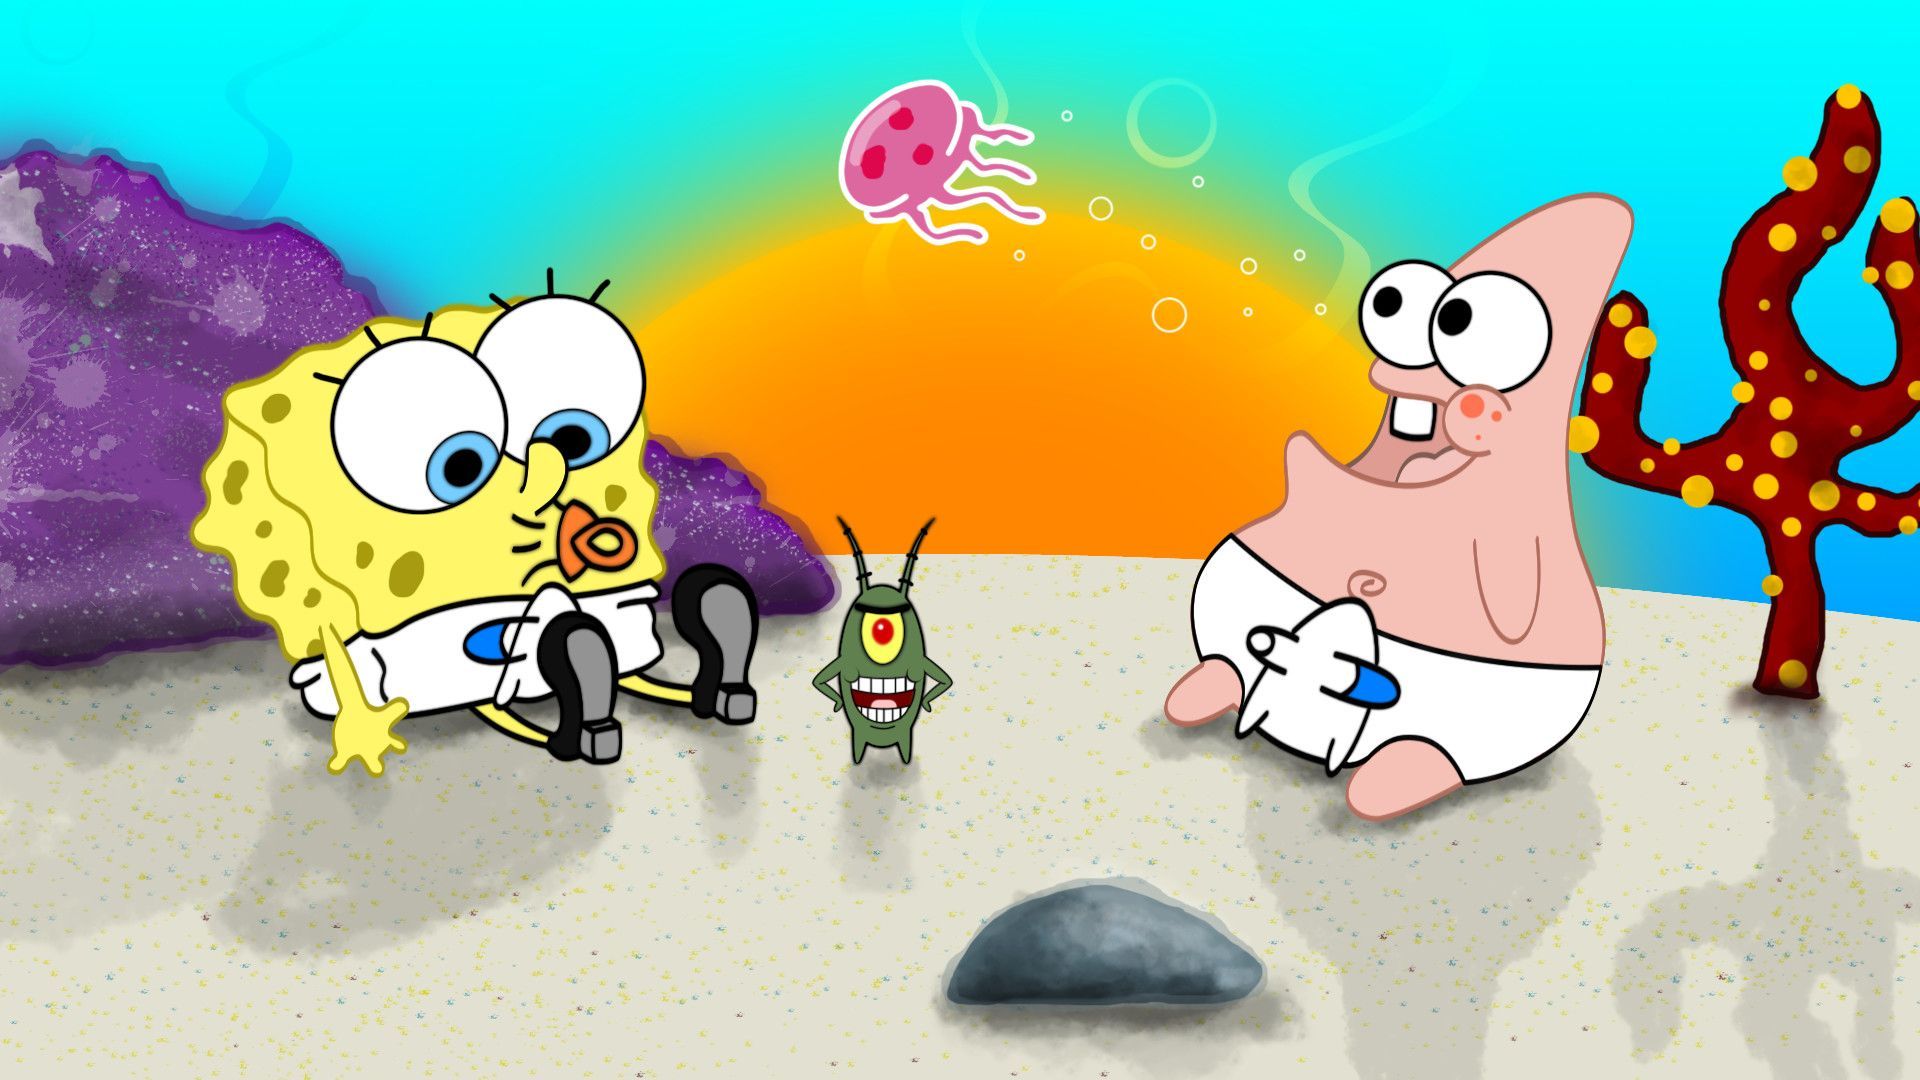 A cartoon of two sponge bob characters - SpongeBob